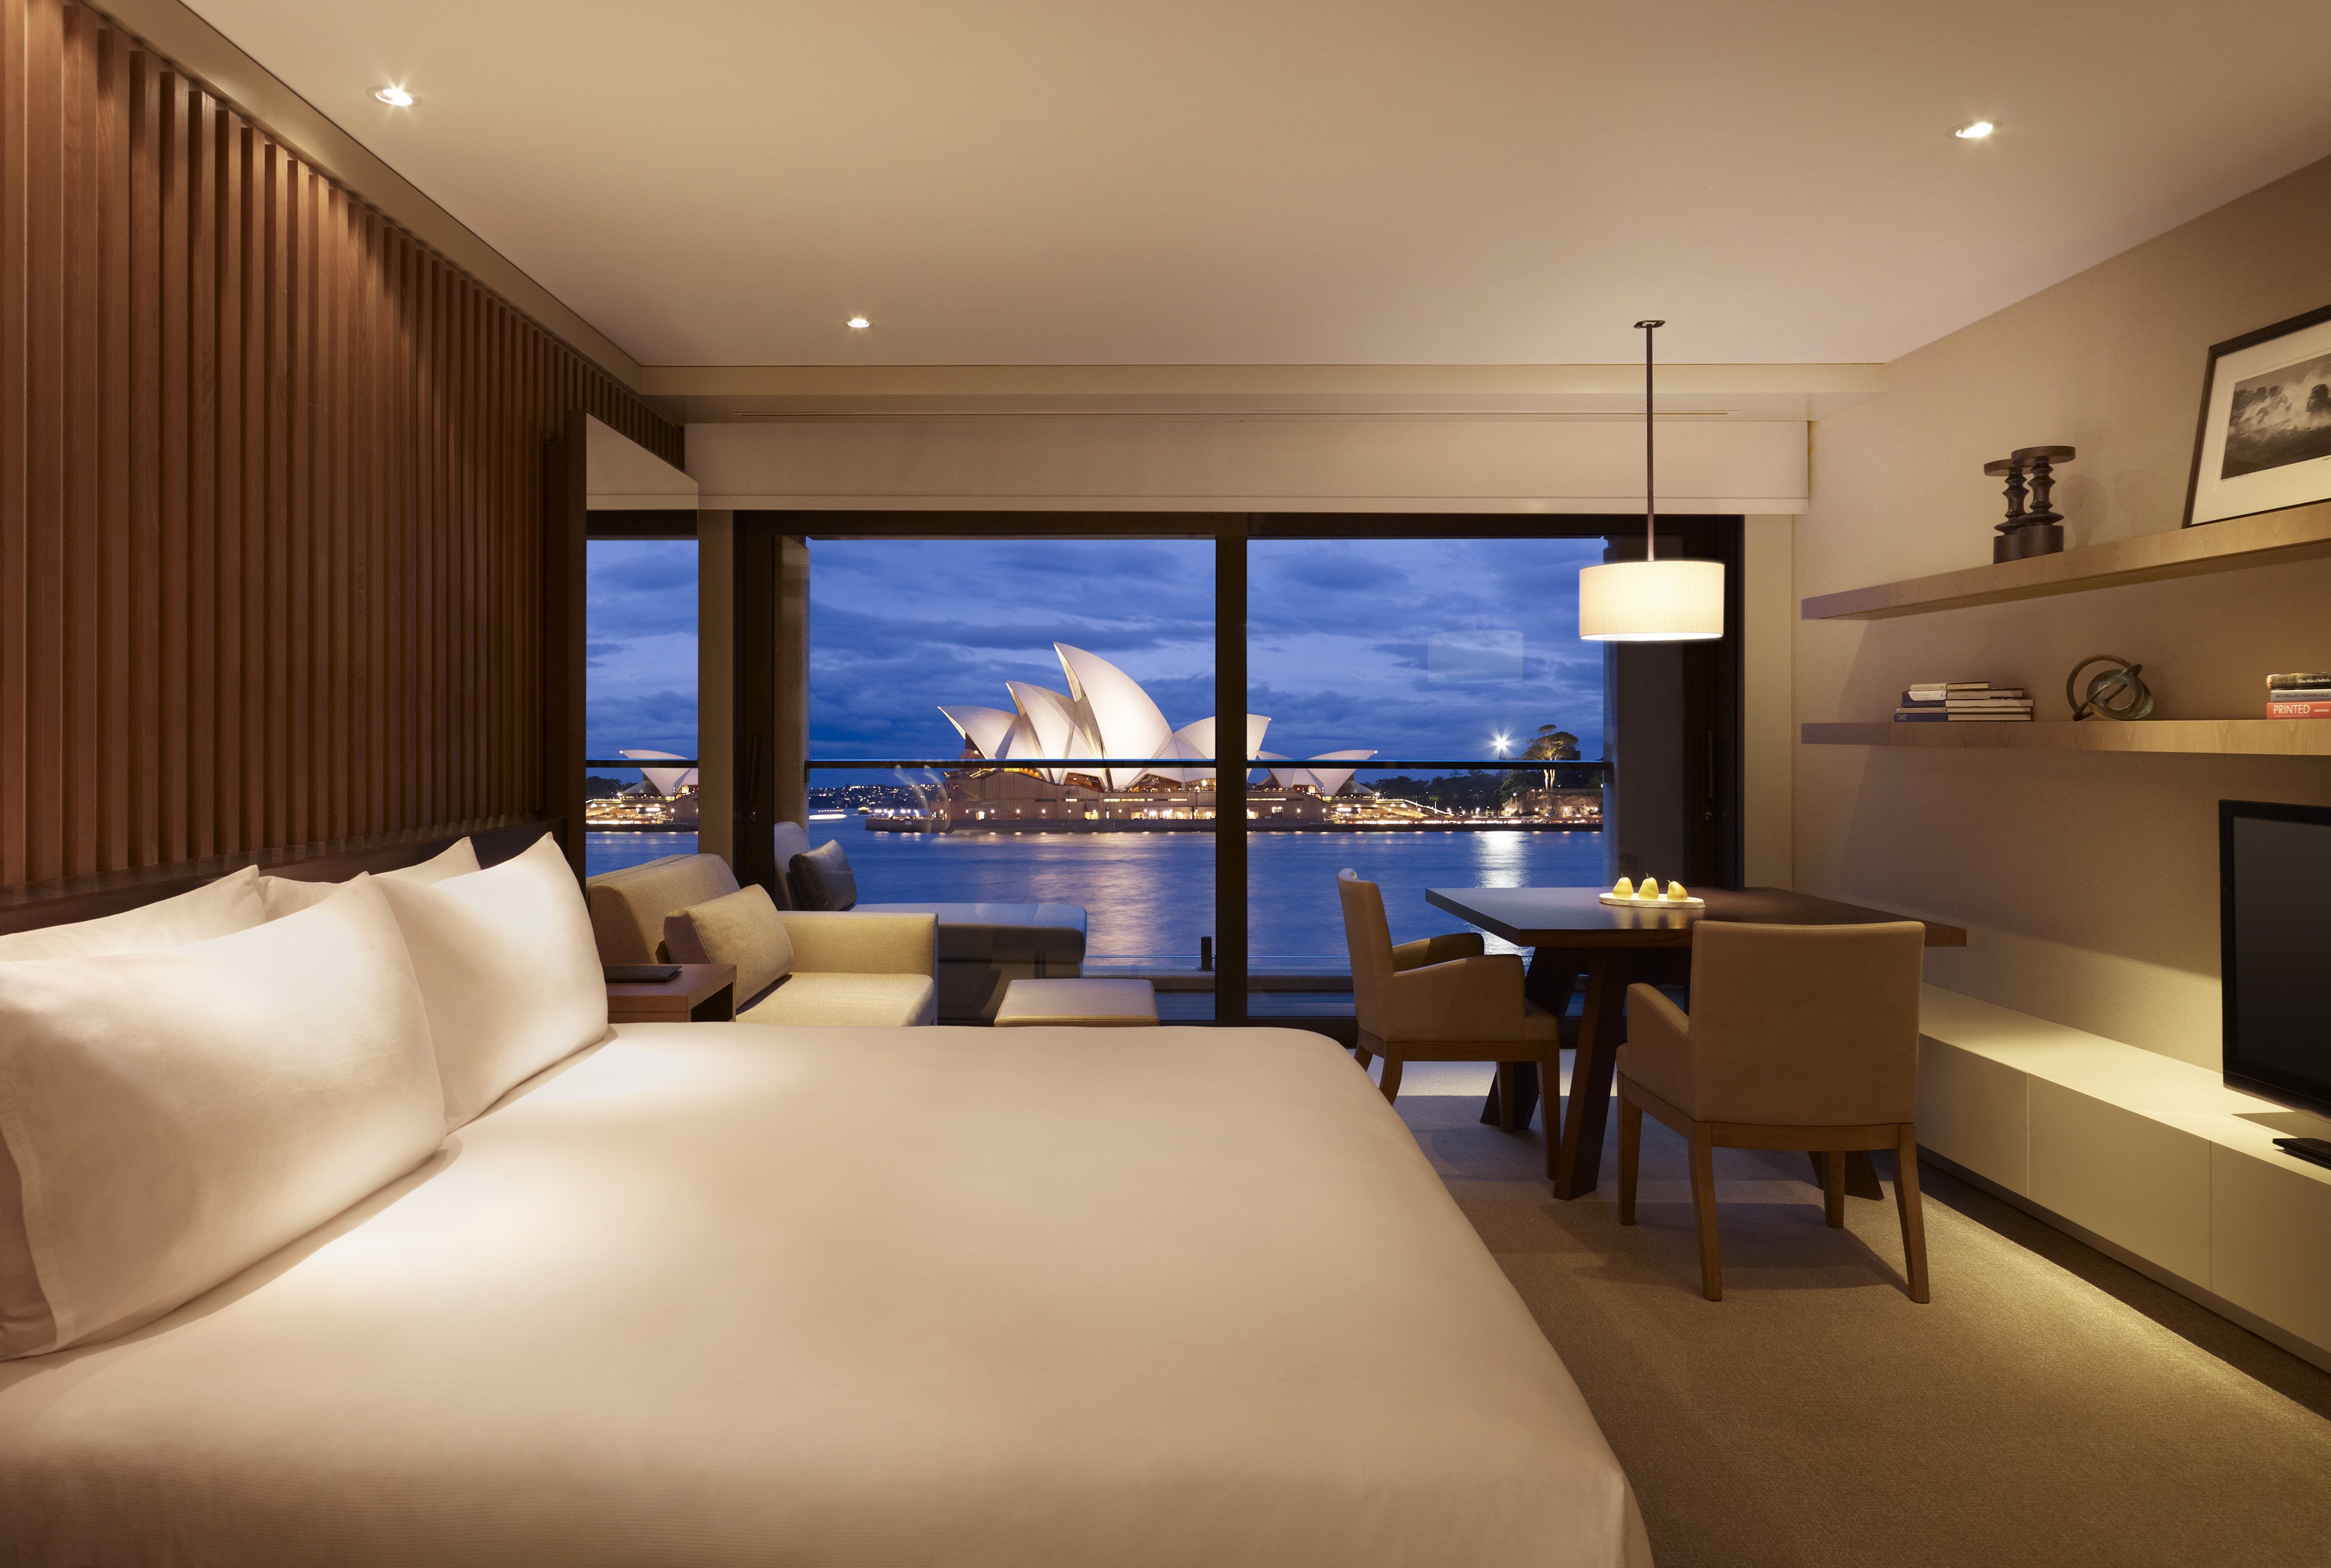 Топ 5 отелей. Парк Хаятт Сидней. Парк Хаятт (Австралия). Отель парк Хаятт / Park Hyatt в Сиднее (Австралия). Комната в отеле.